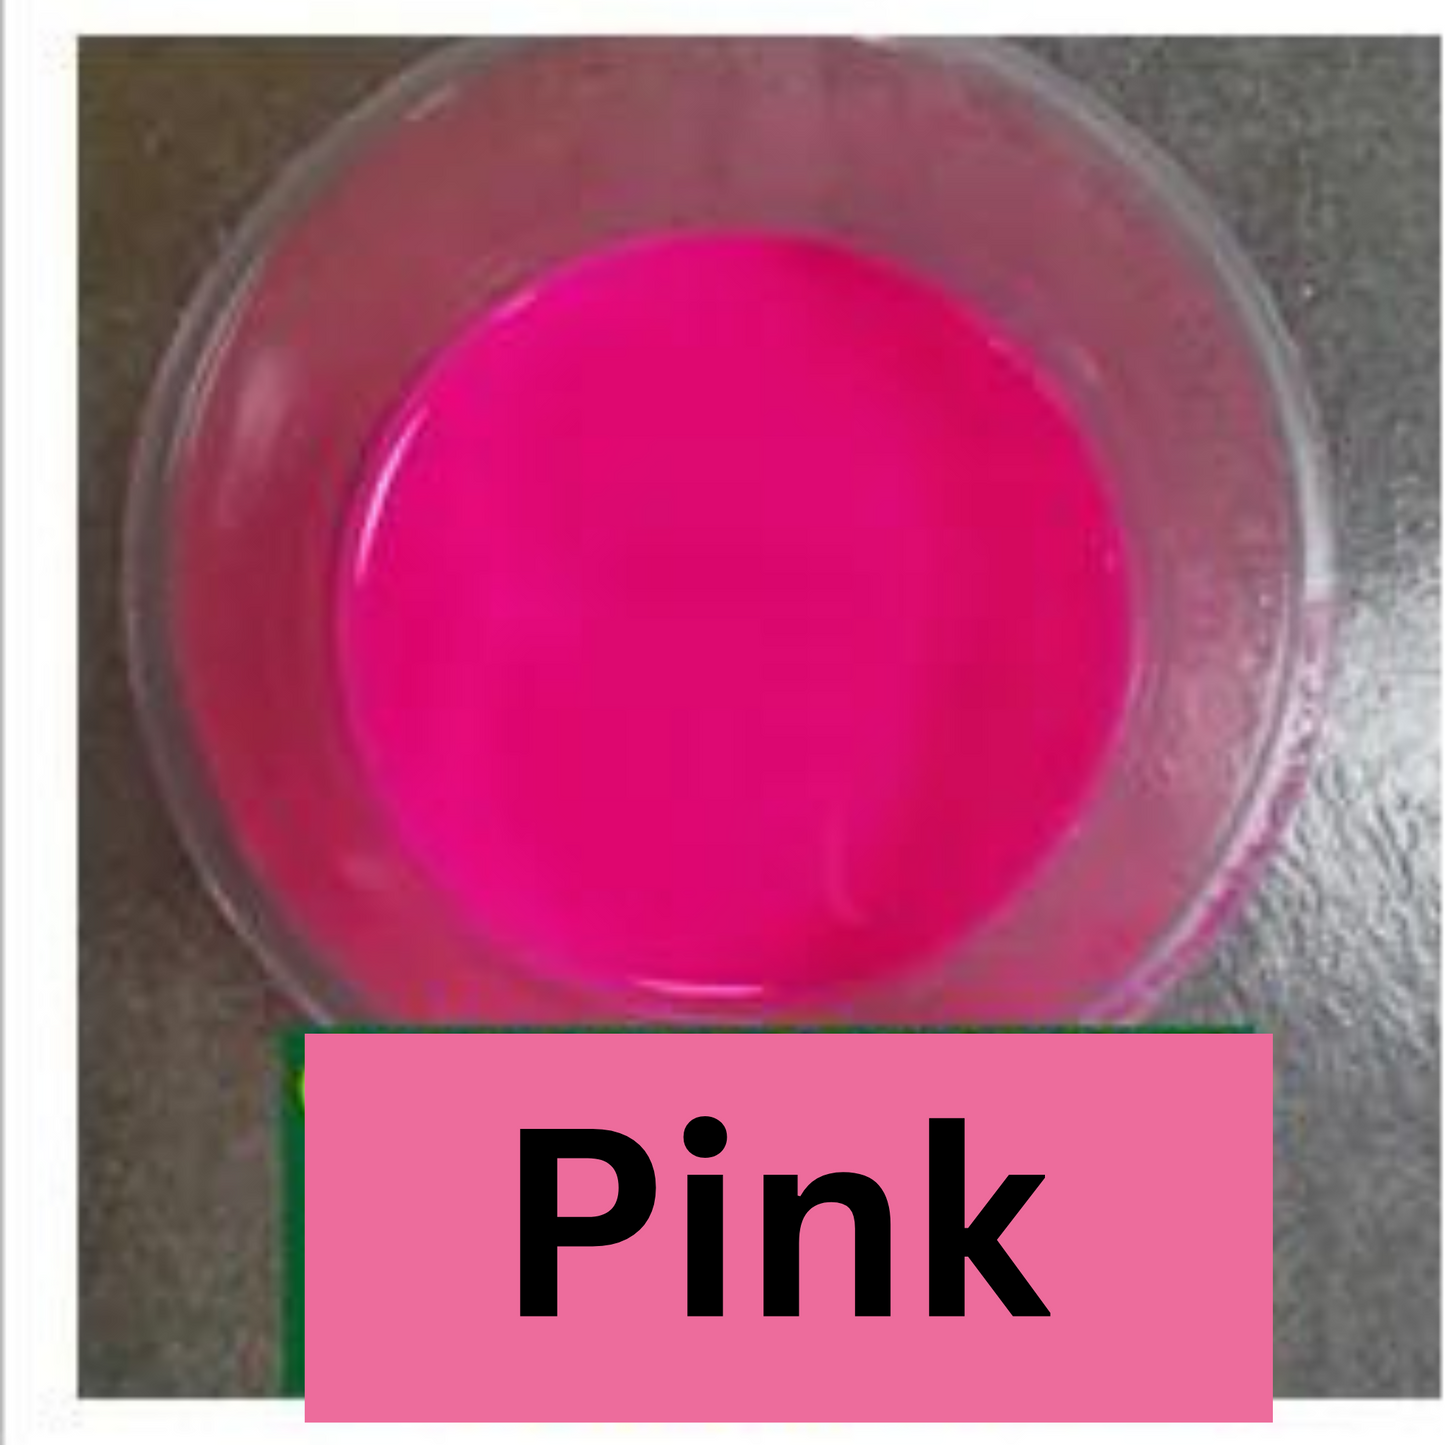 Pink Pigment Paste